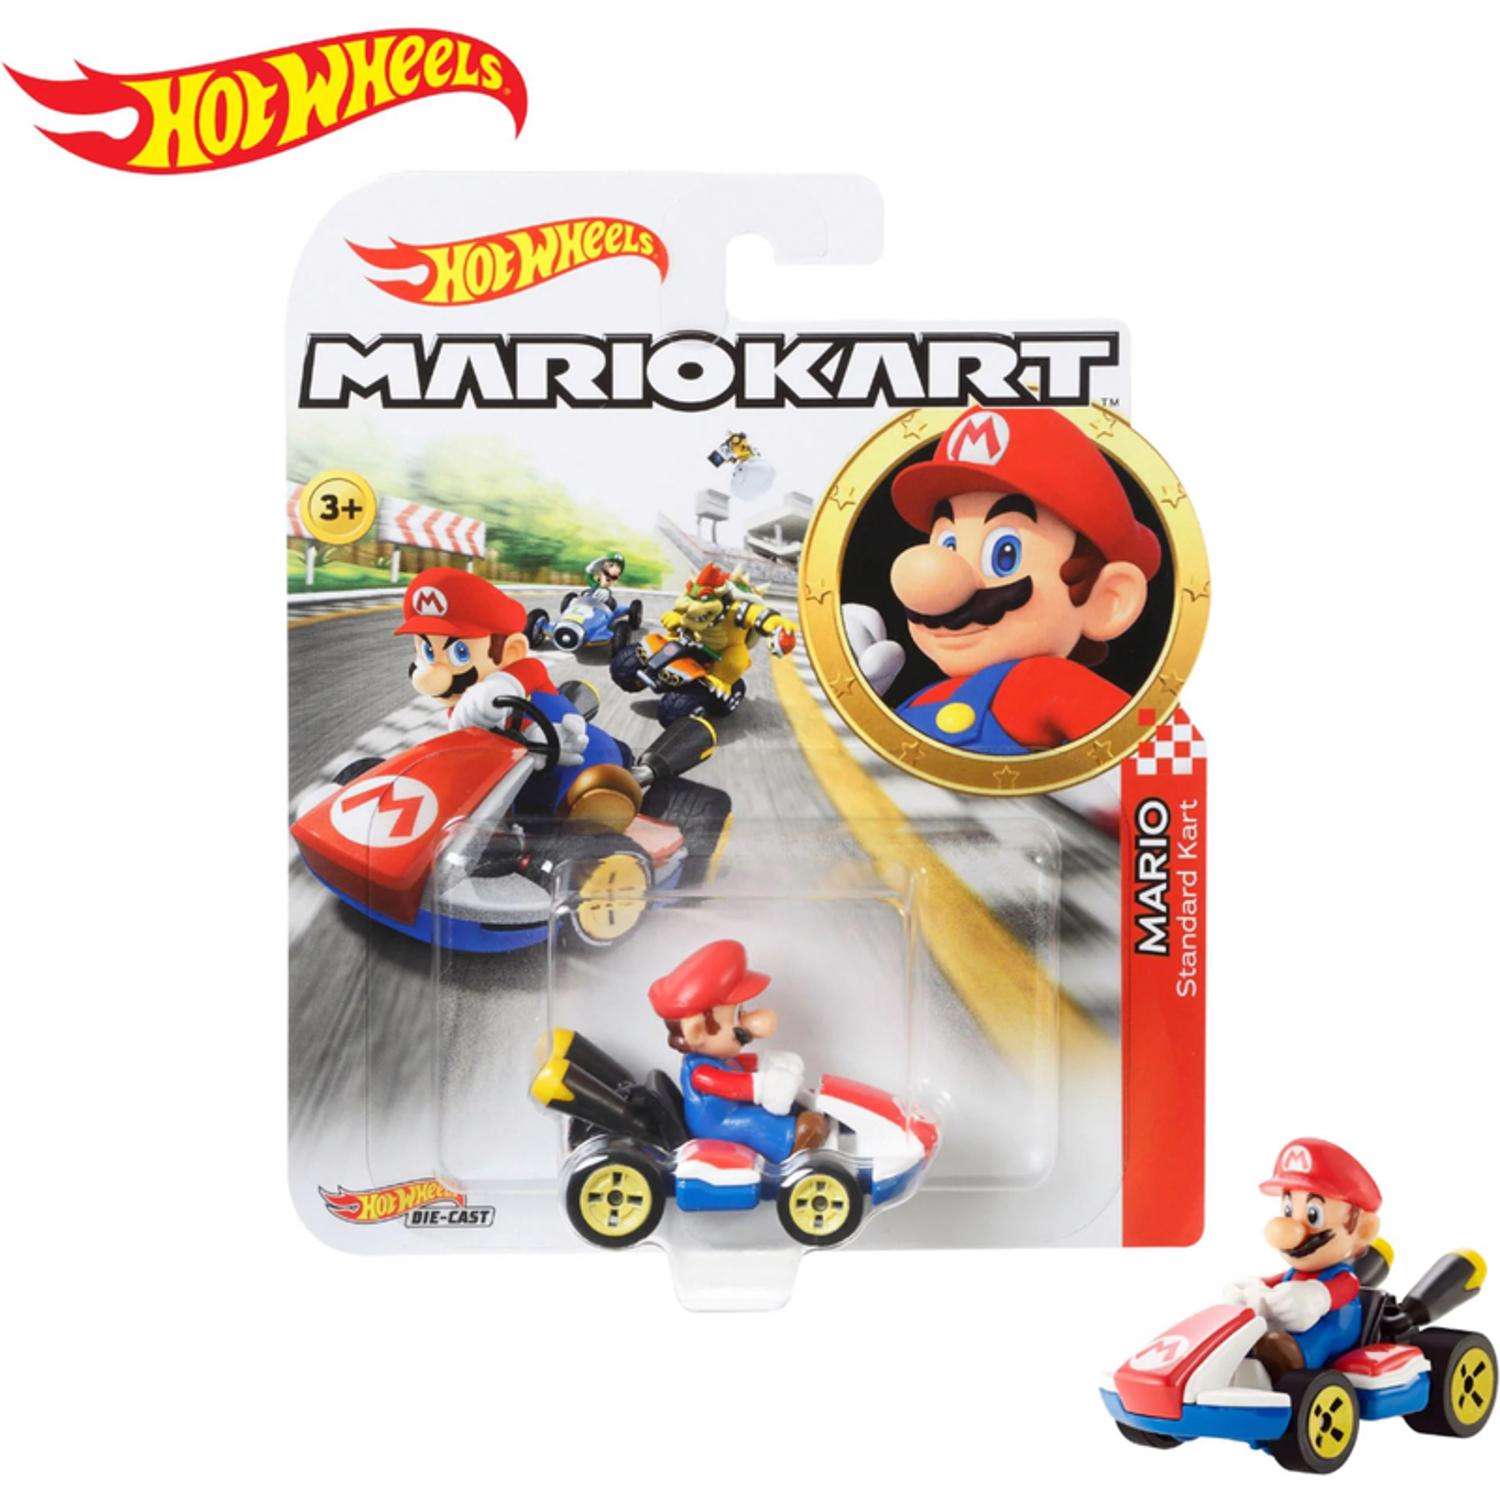 Hot Wheels Mario Kart Replica Vehicles Die Cast Assorted - Ace Hardware